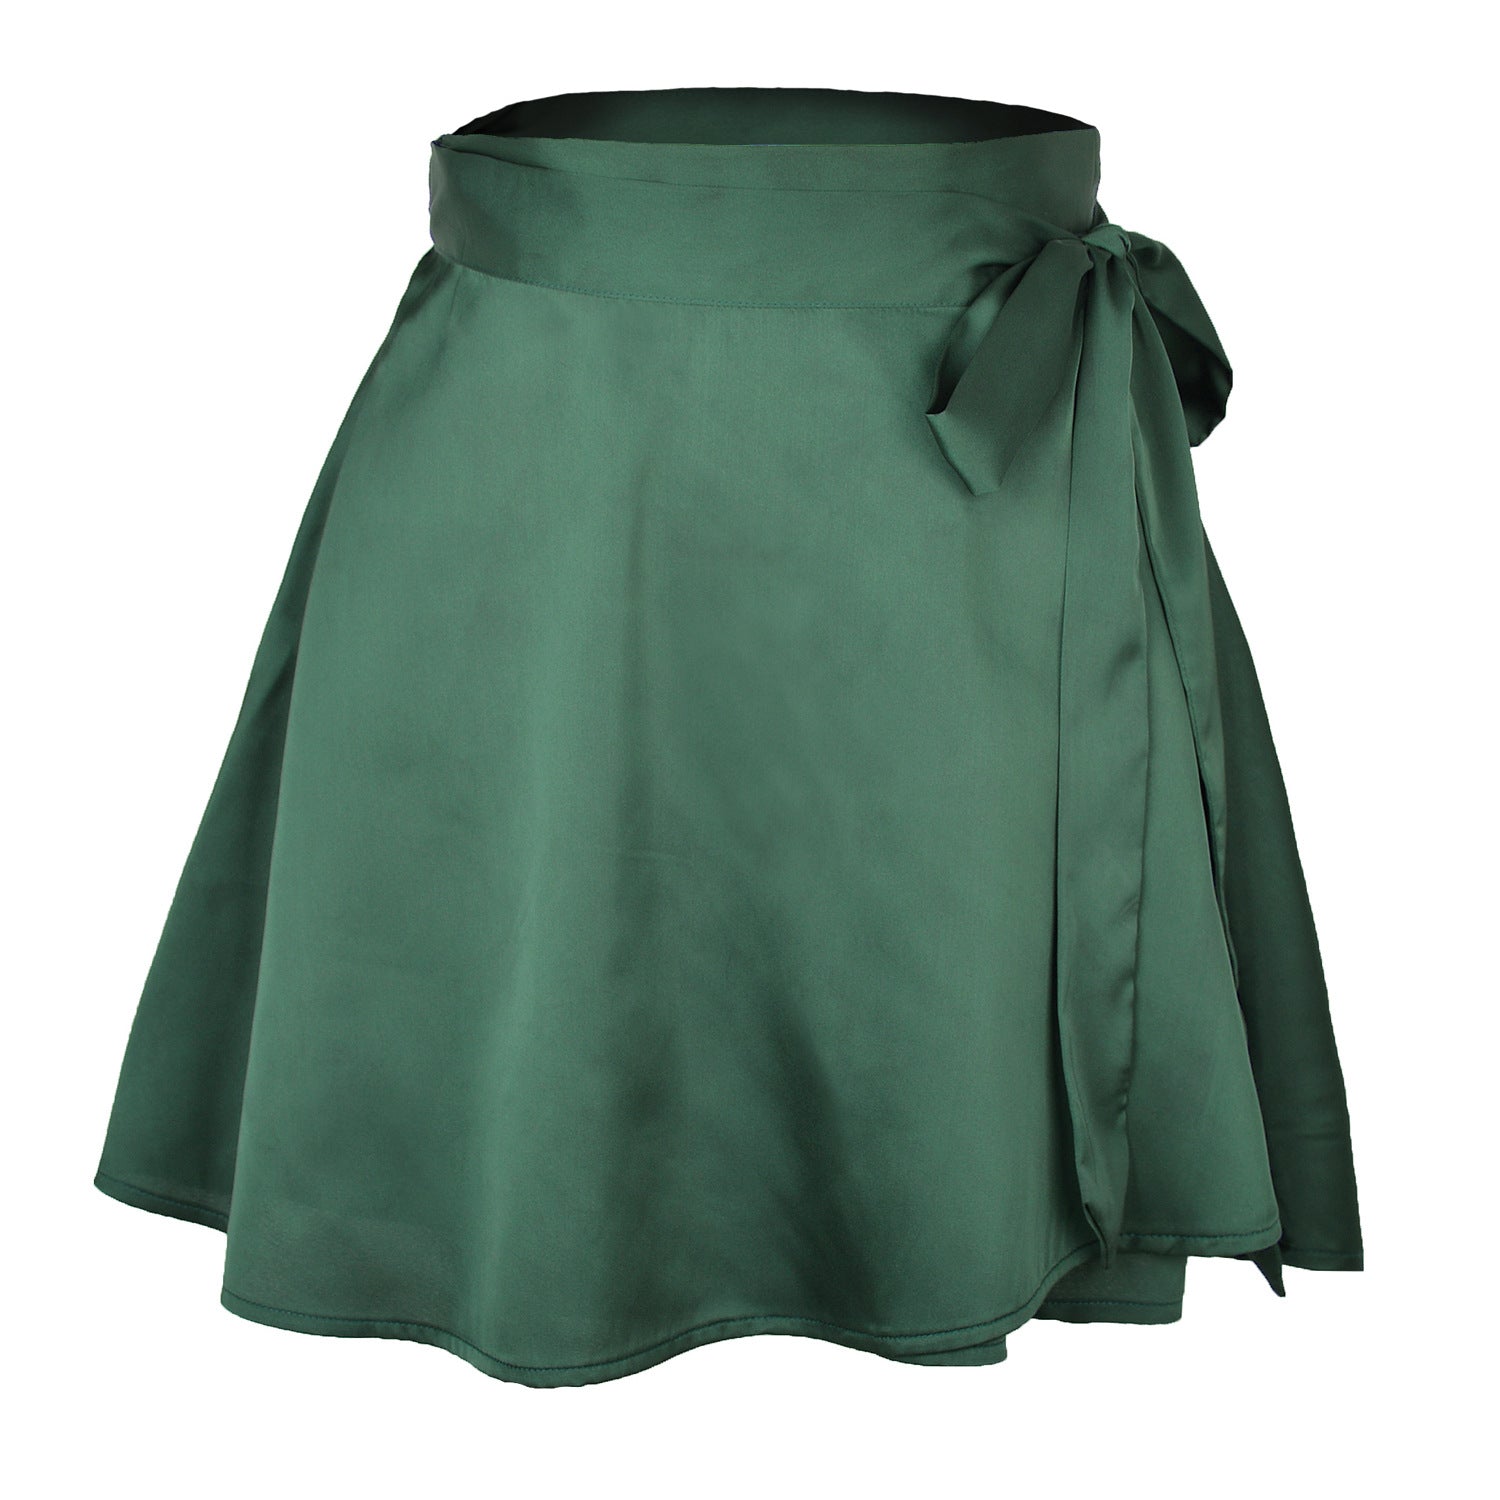 Summer Solid High Waist Sweet Fashion Lace-up Chiffon Satin Wrap Skirt